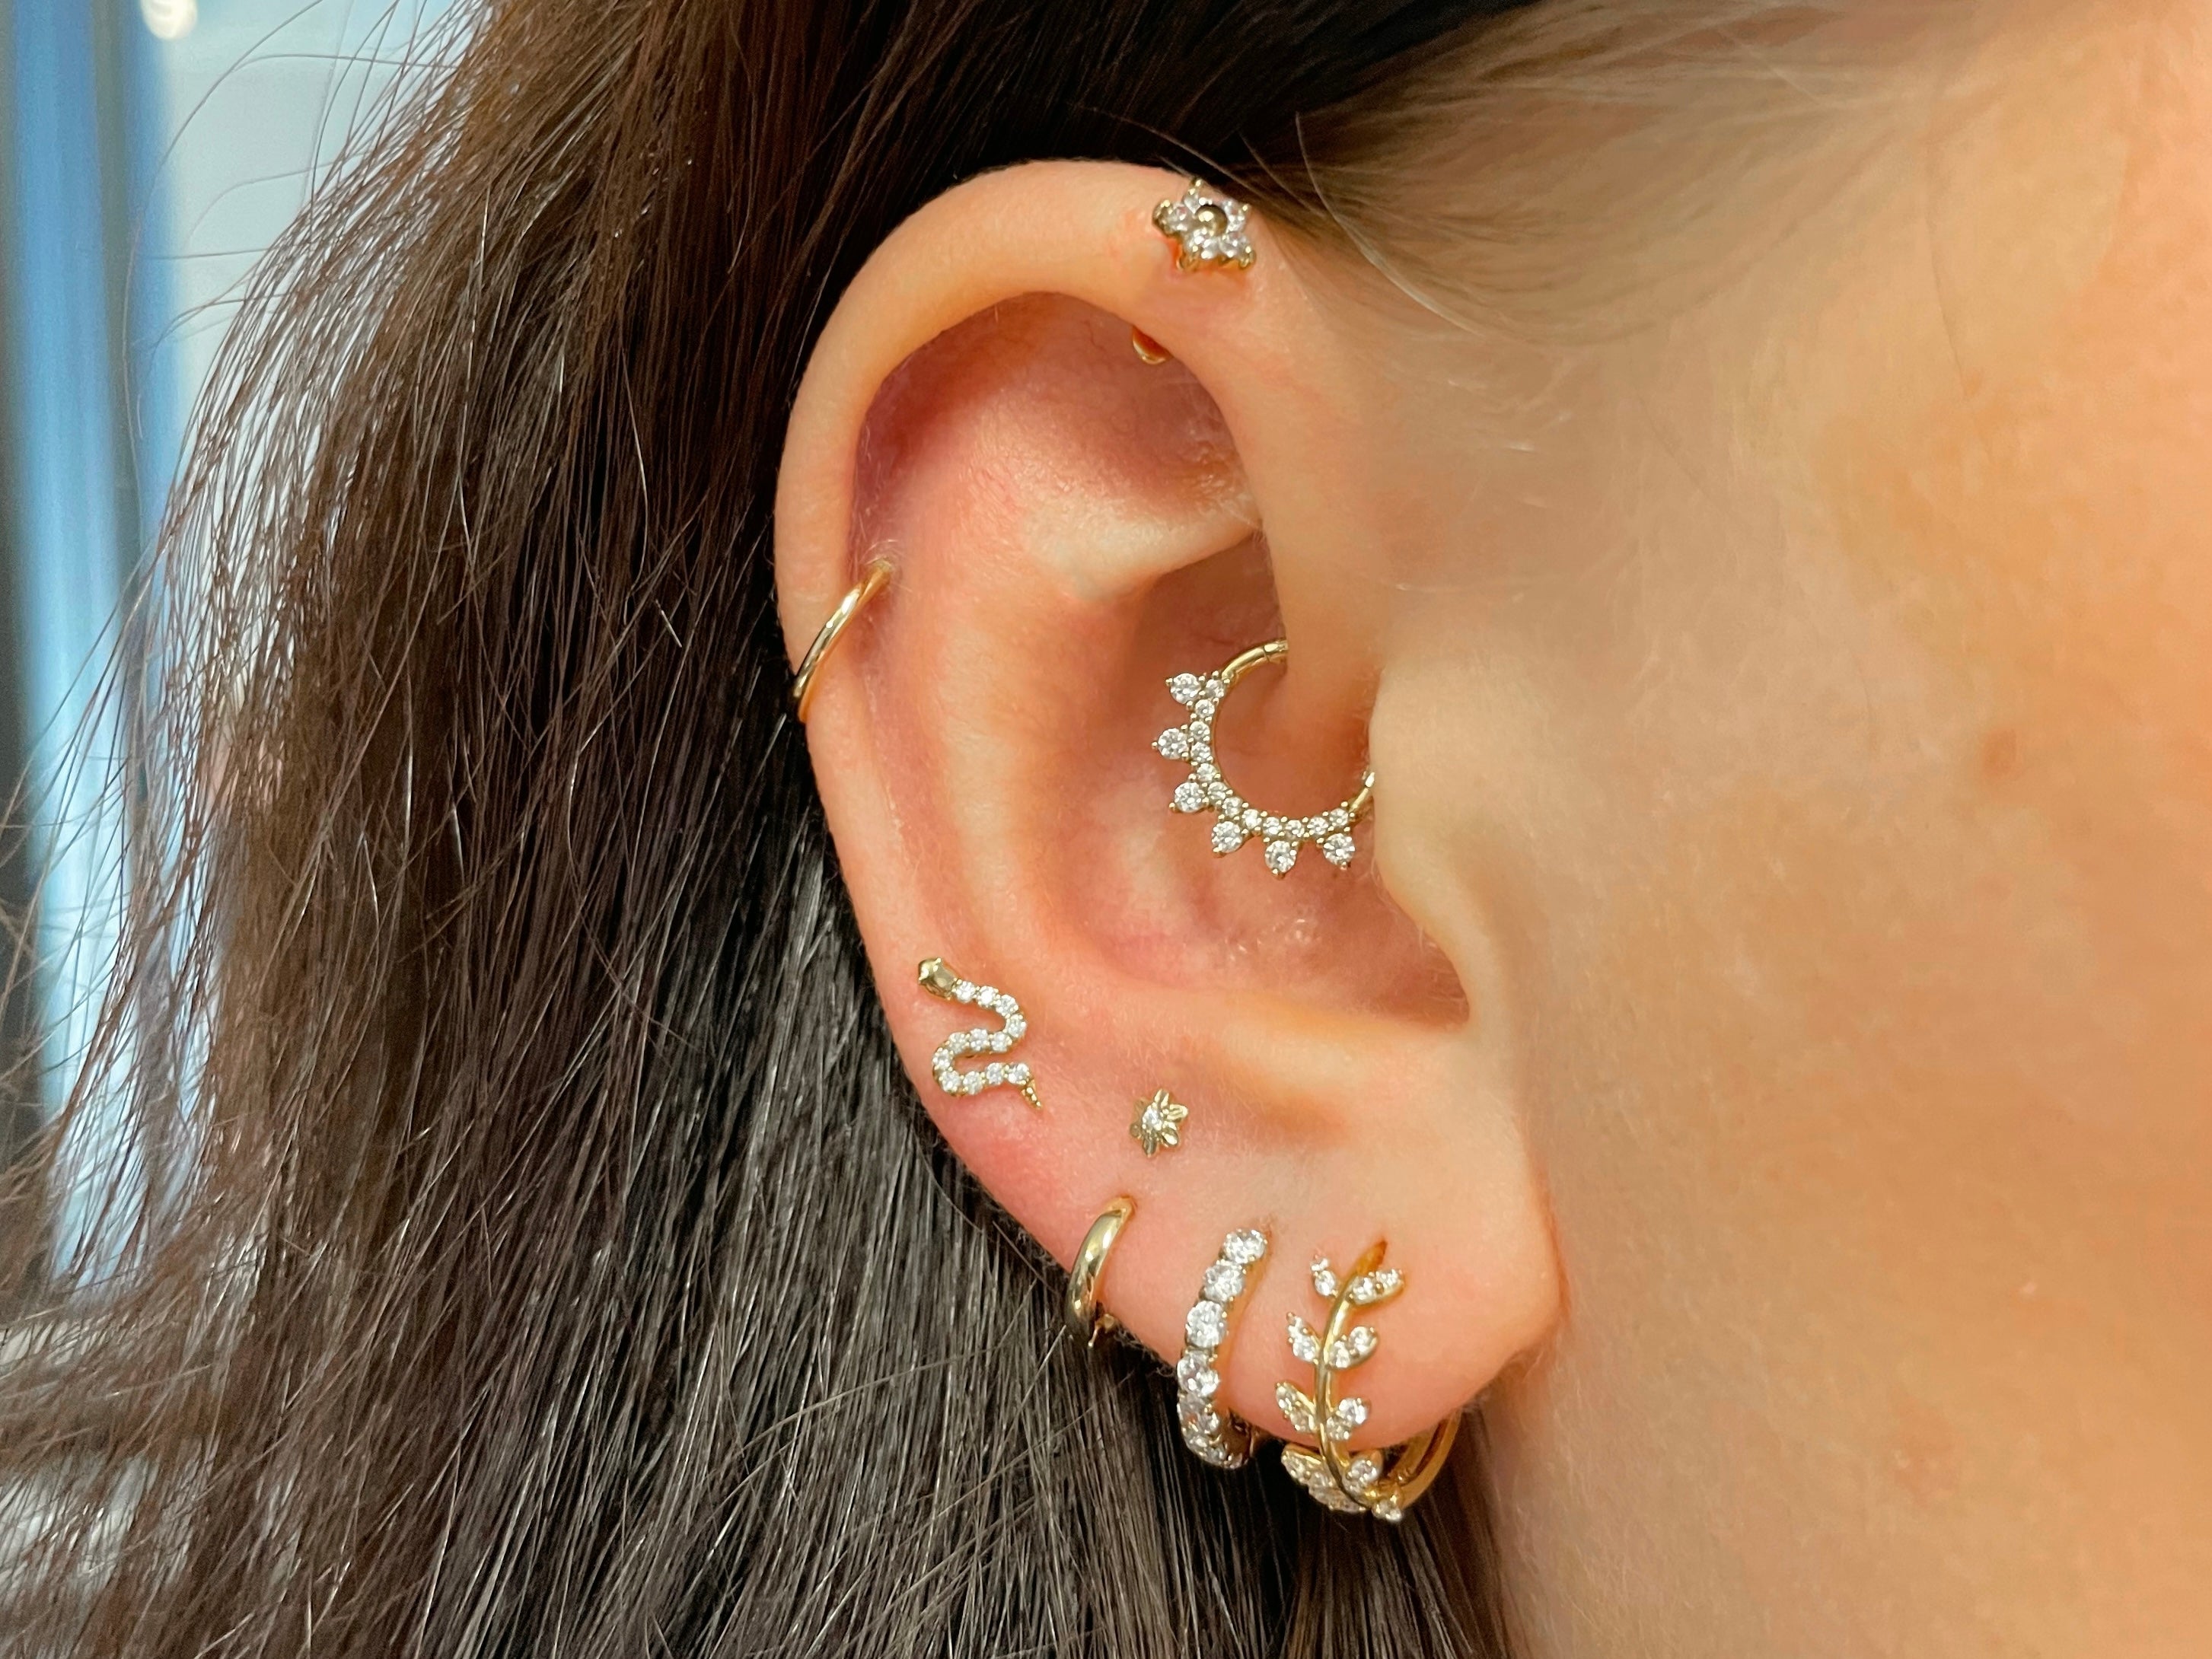 Simple Style Body Piercing Jewelry Tragus Helix Earrings Forward